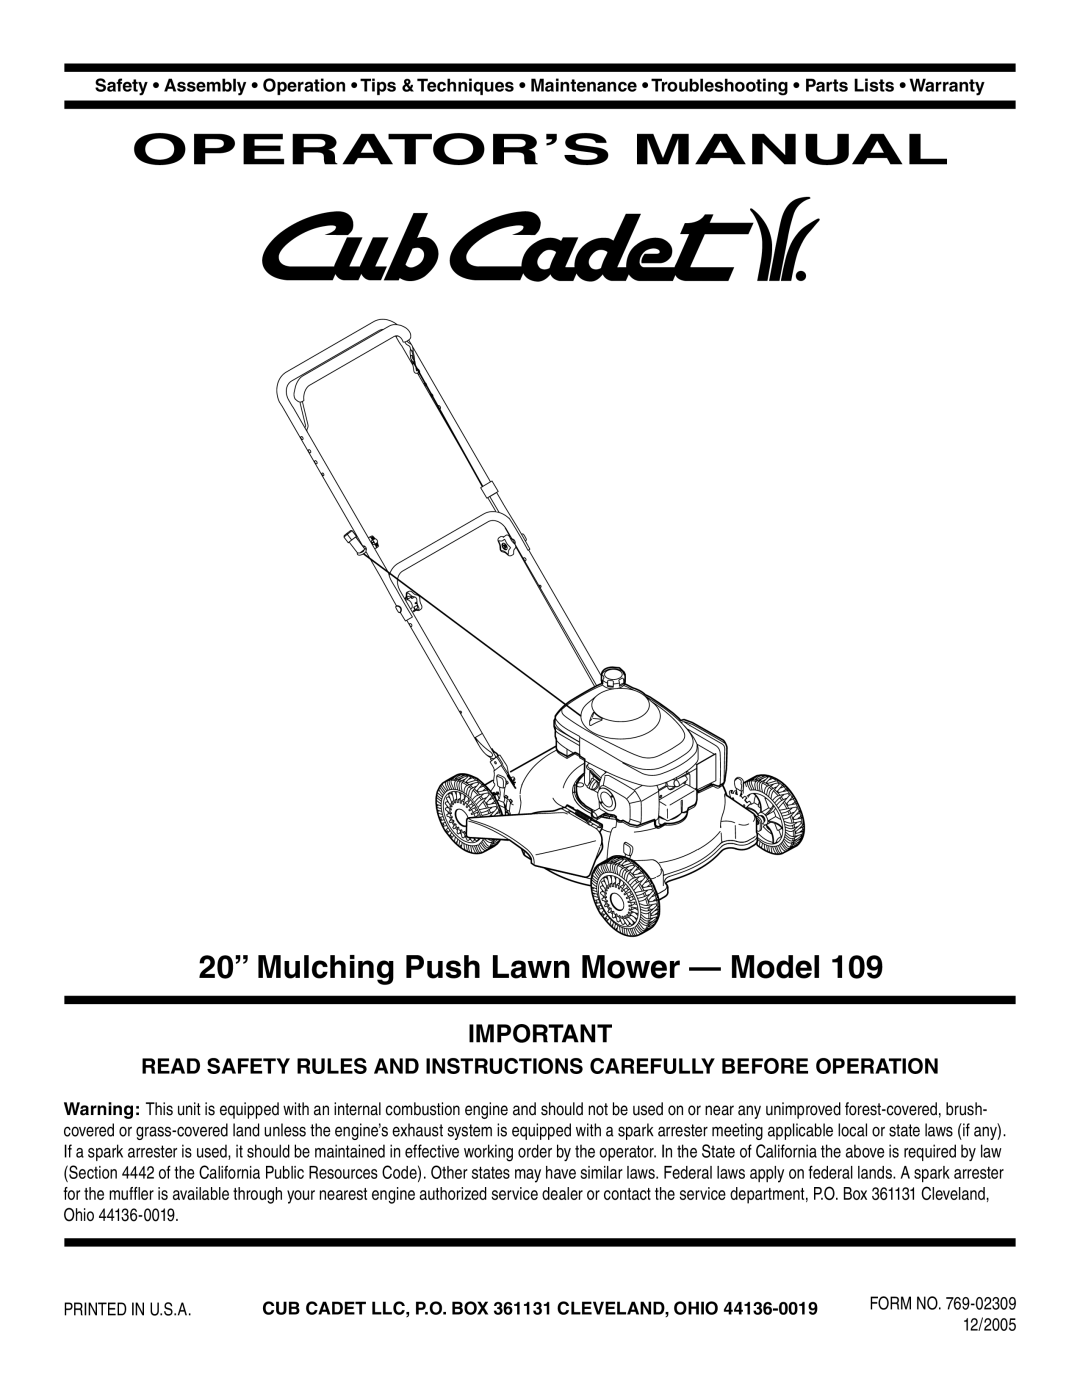 Cub Cadet 109 warranty Operator’S Manual, 20” Mulching Push Lawn Mower - Model 